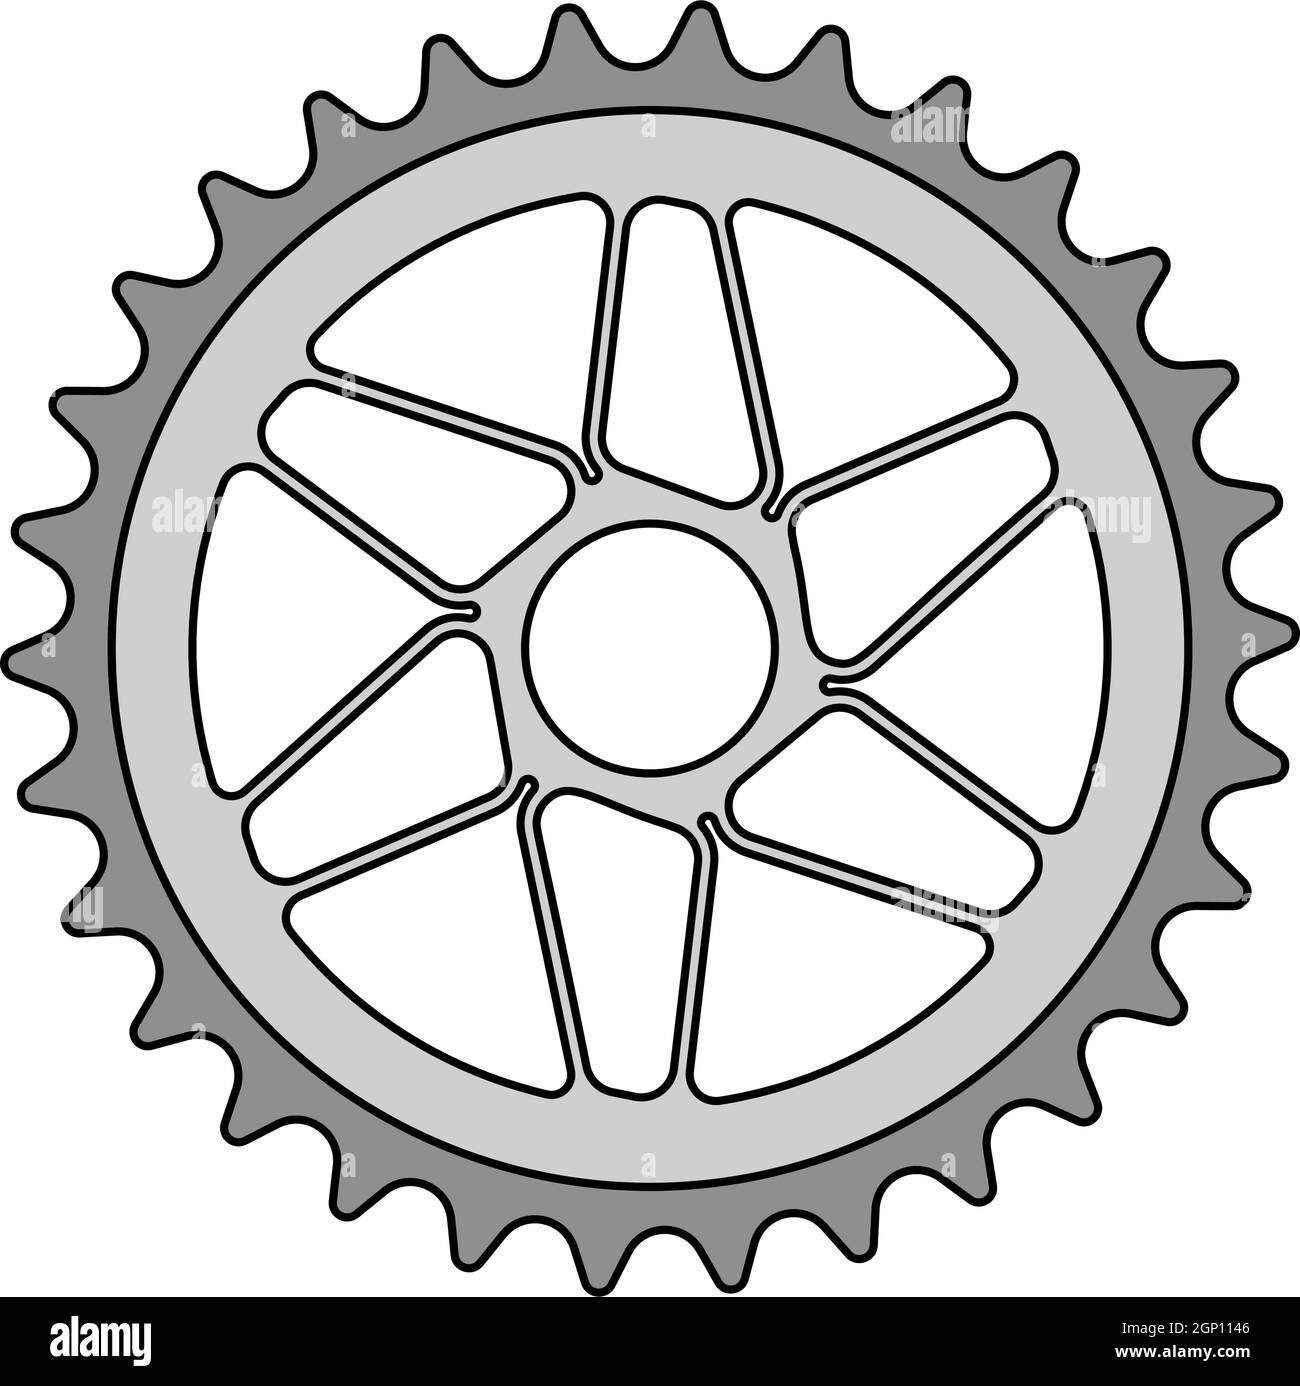 Bike Gear Star Icon Stock Vector